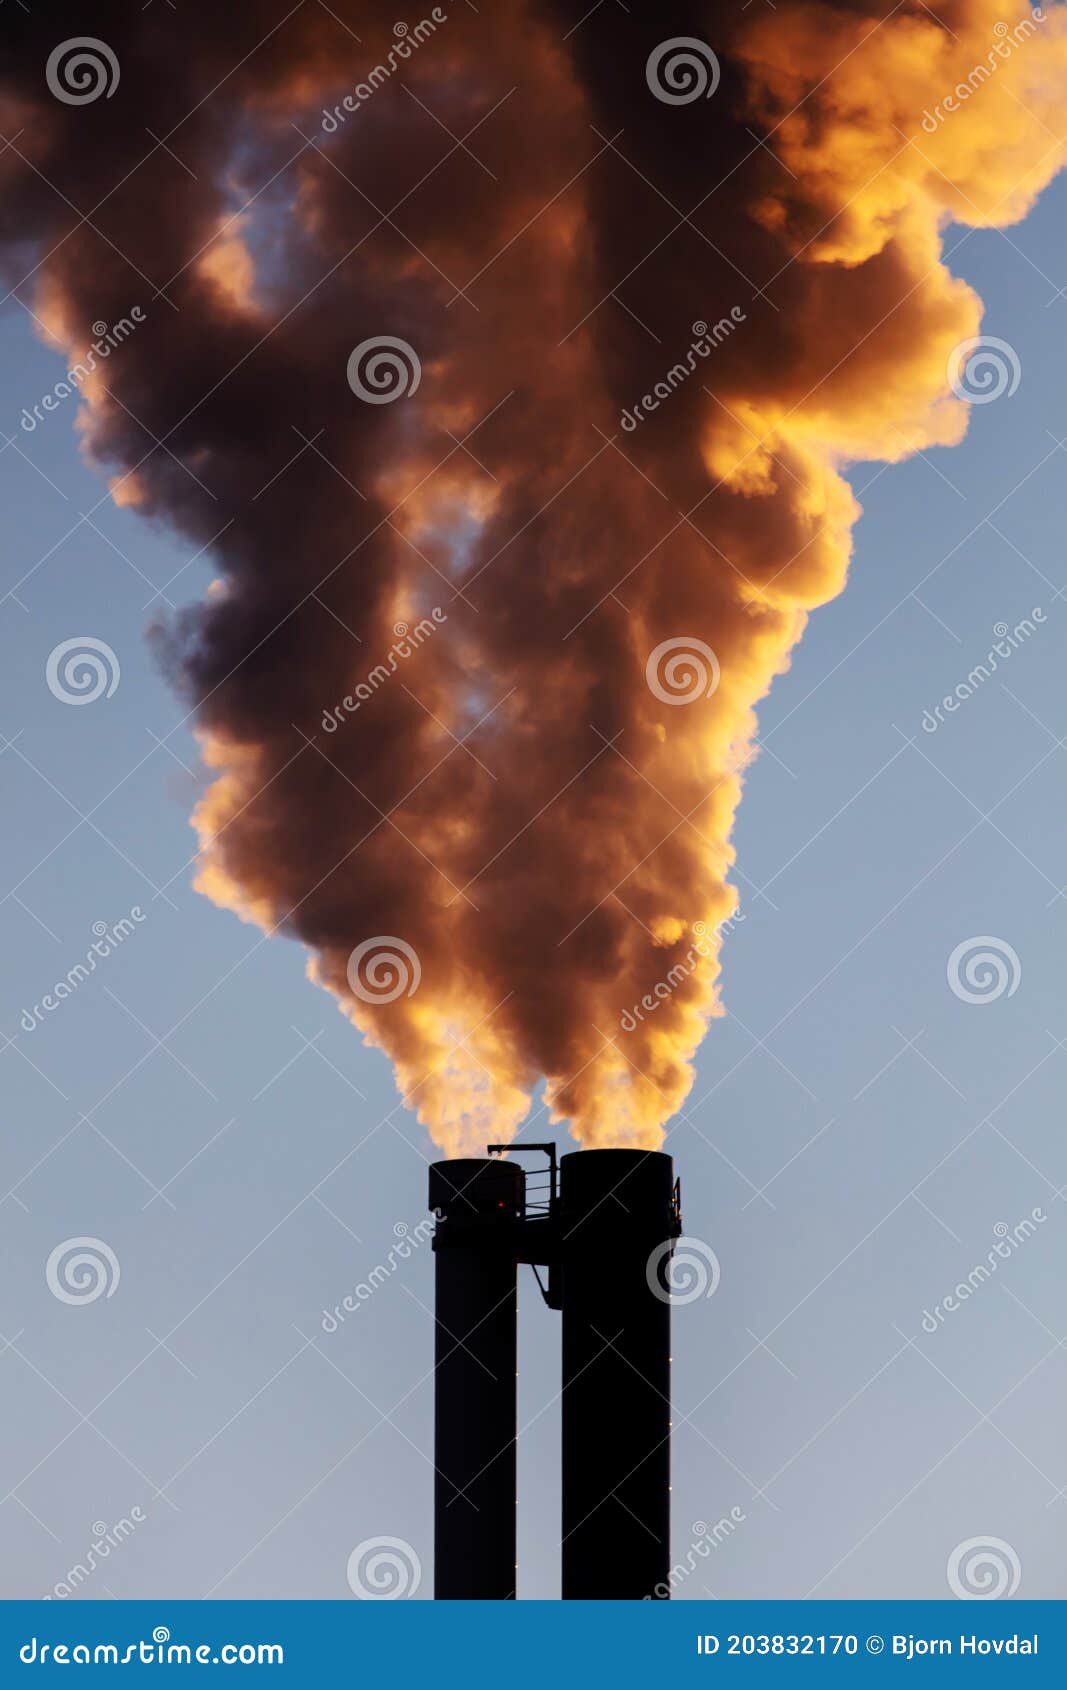 chimney with vapor